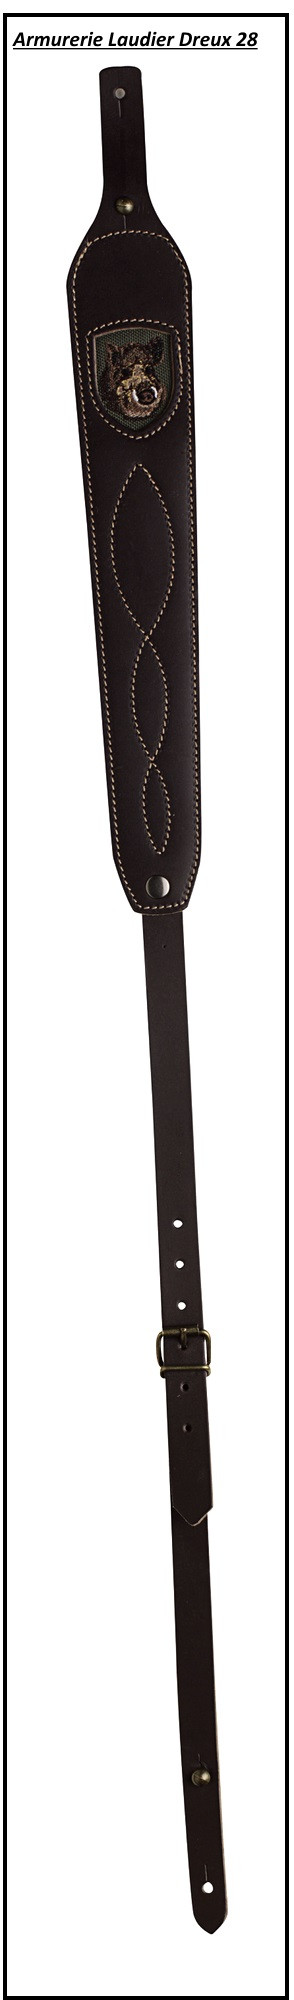 Bretelle cuir- Carabines- avec broderie sanglier-Ref 11450